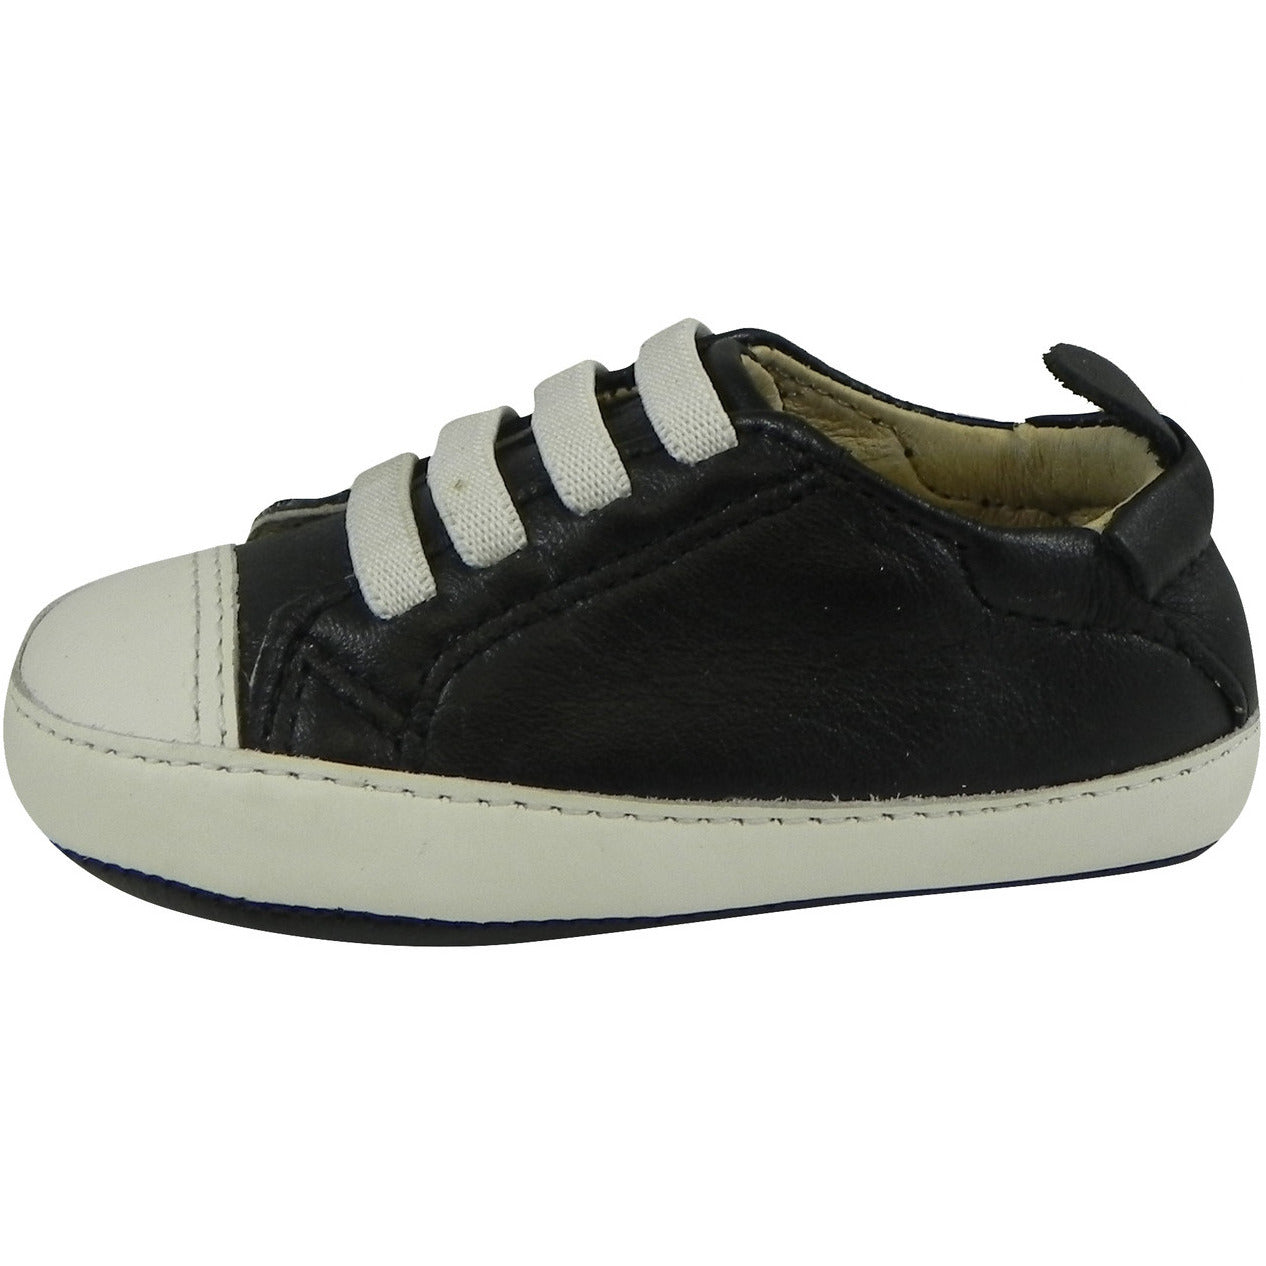 Old Soles Boy's & Girl's 030 Black & White Eazy Tread Sneaker Shoe ...